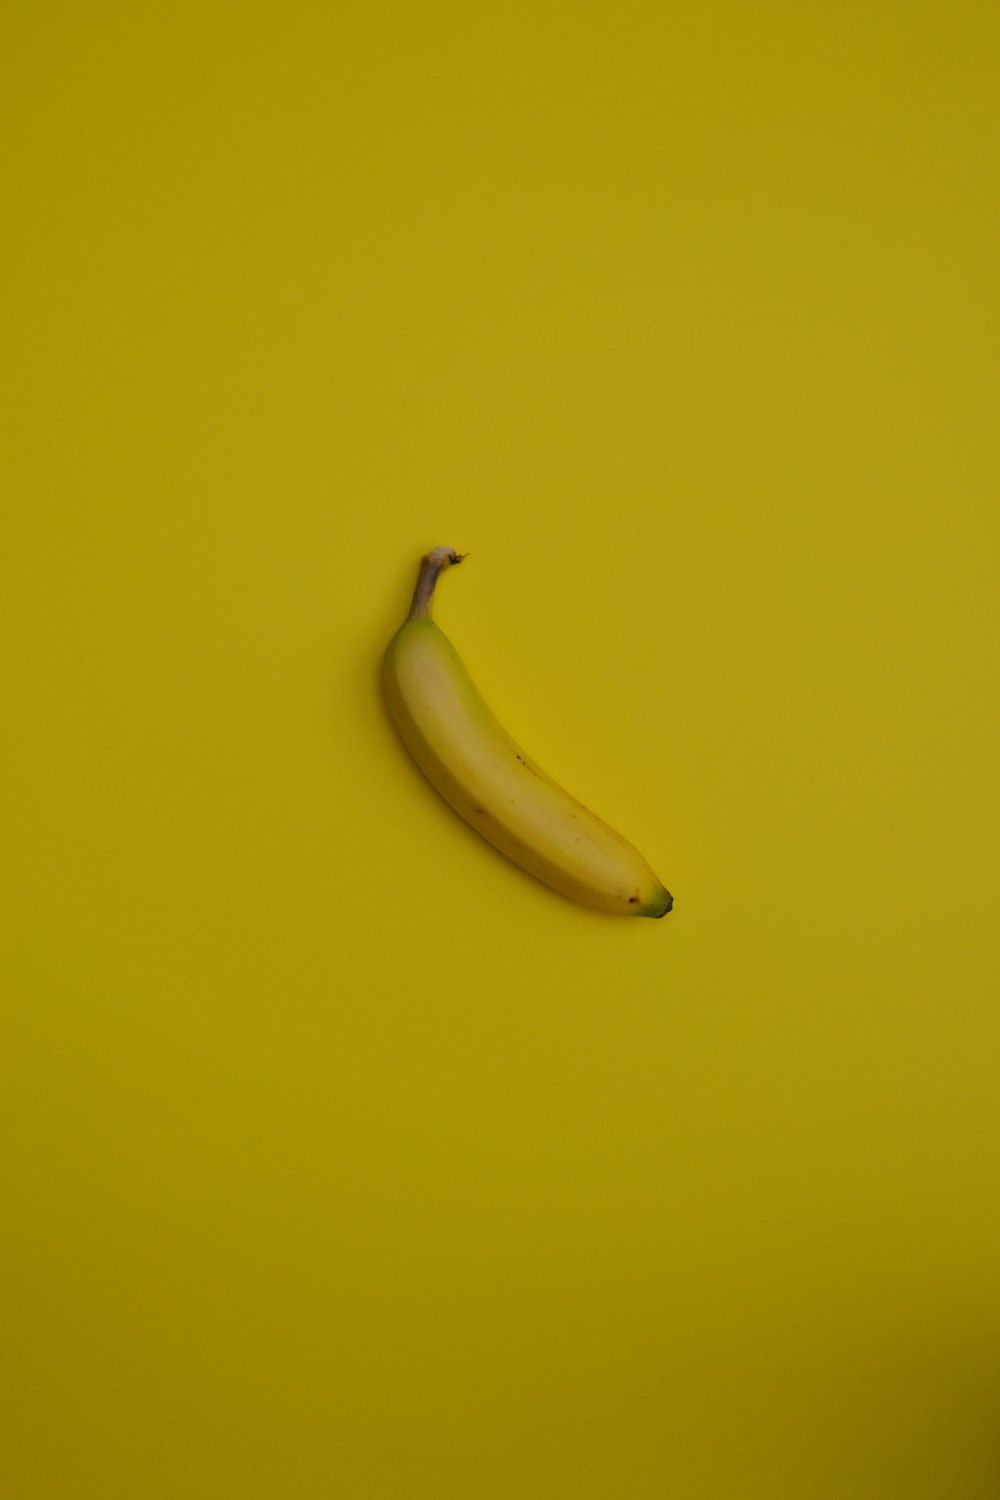 yellow banana fruit on yellow surface photo